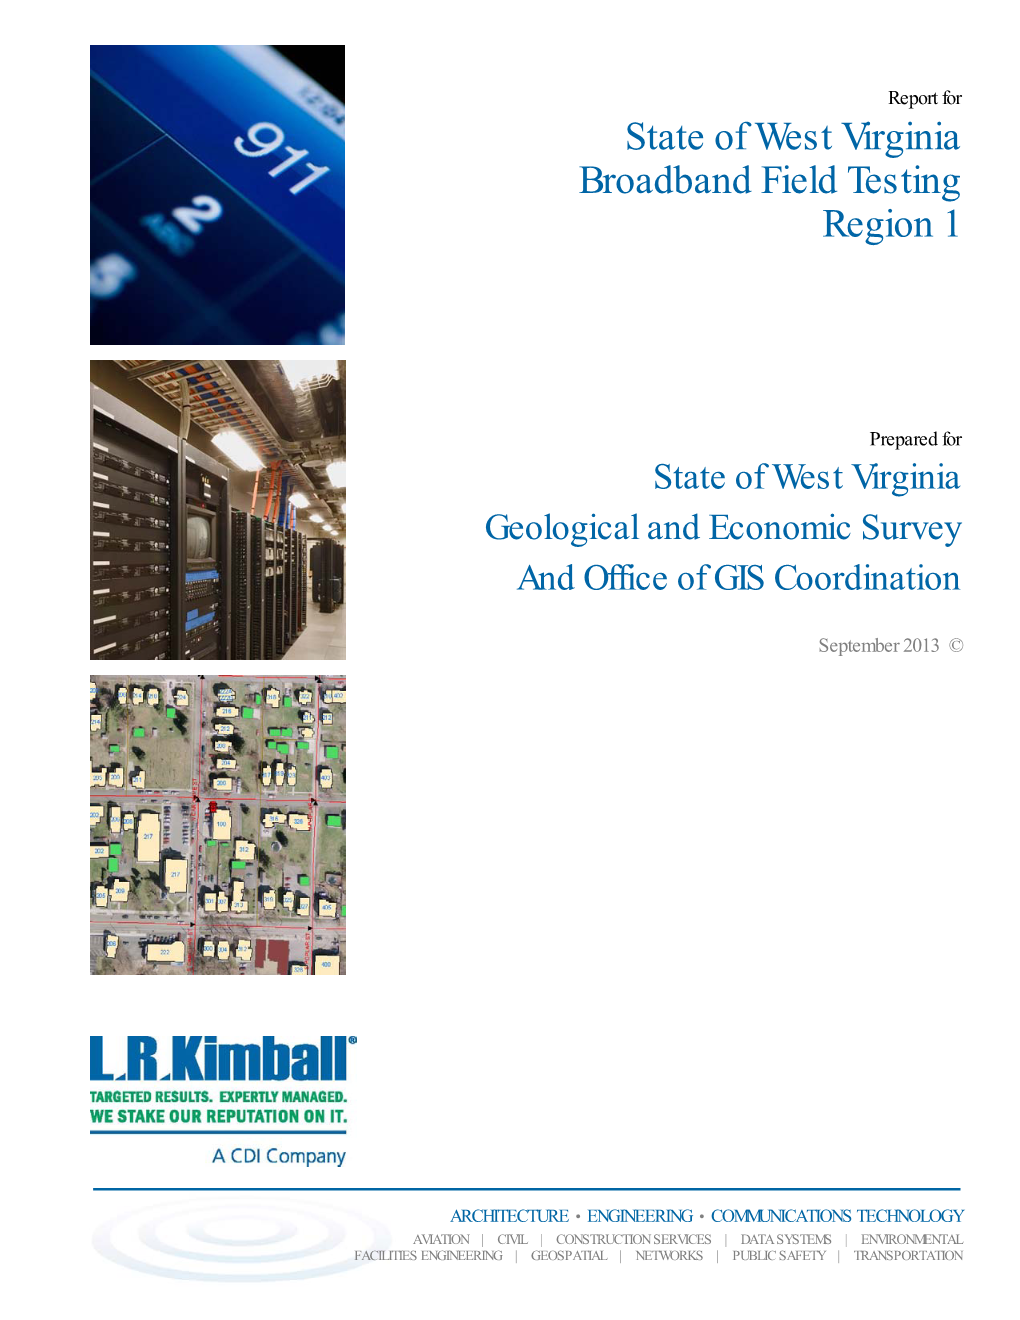 State of West Virginia Broadband Field Testing Region 1